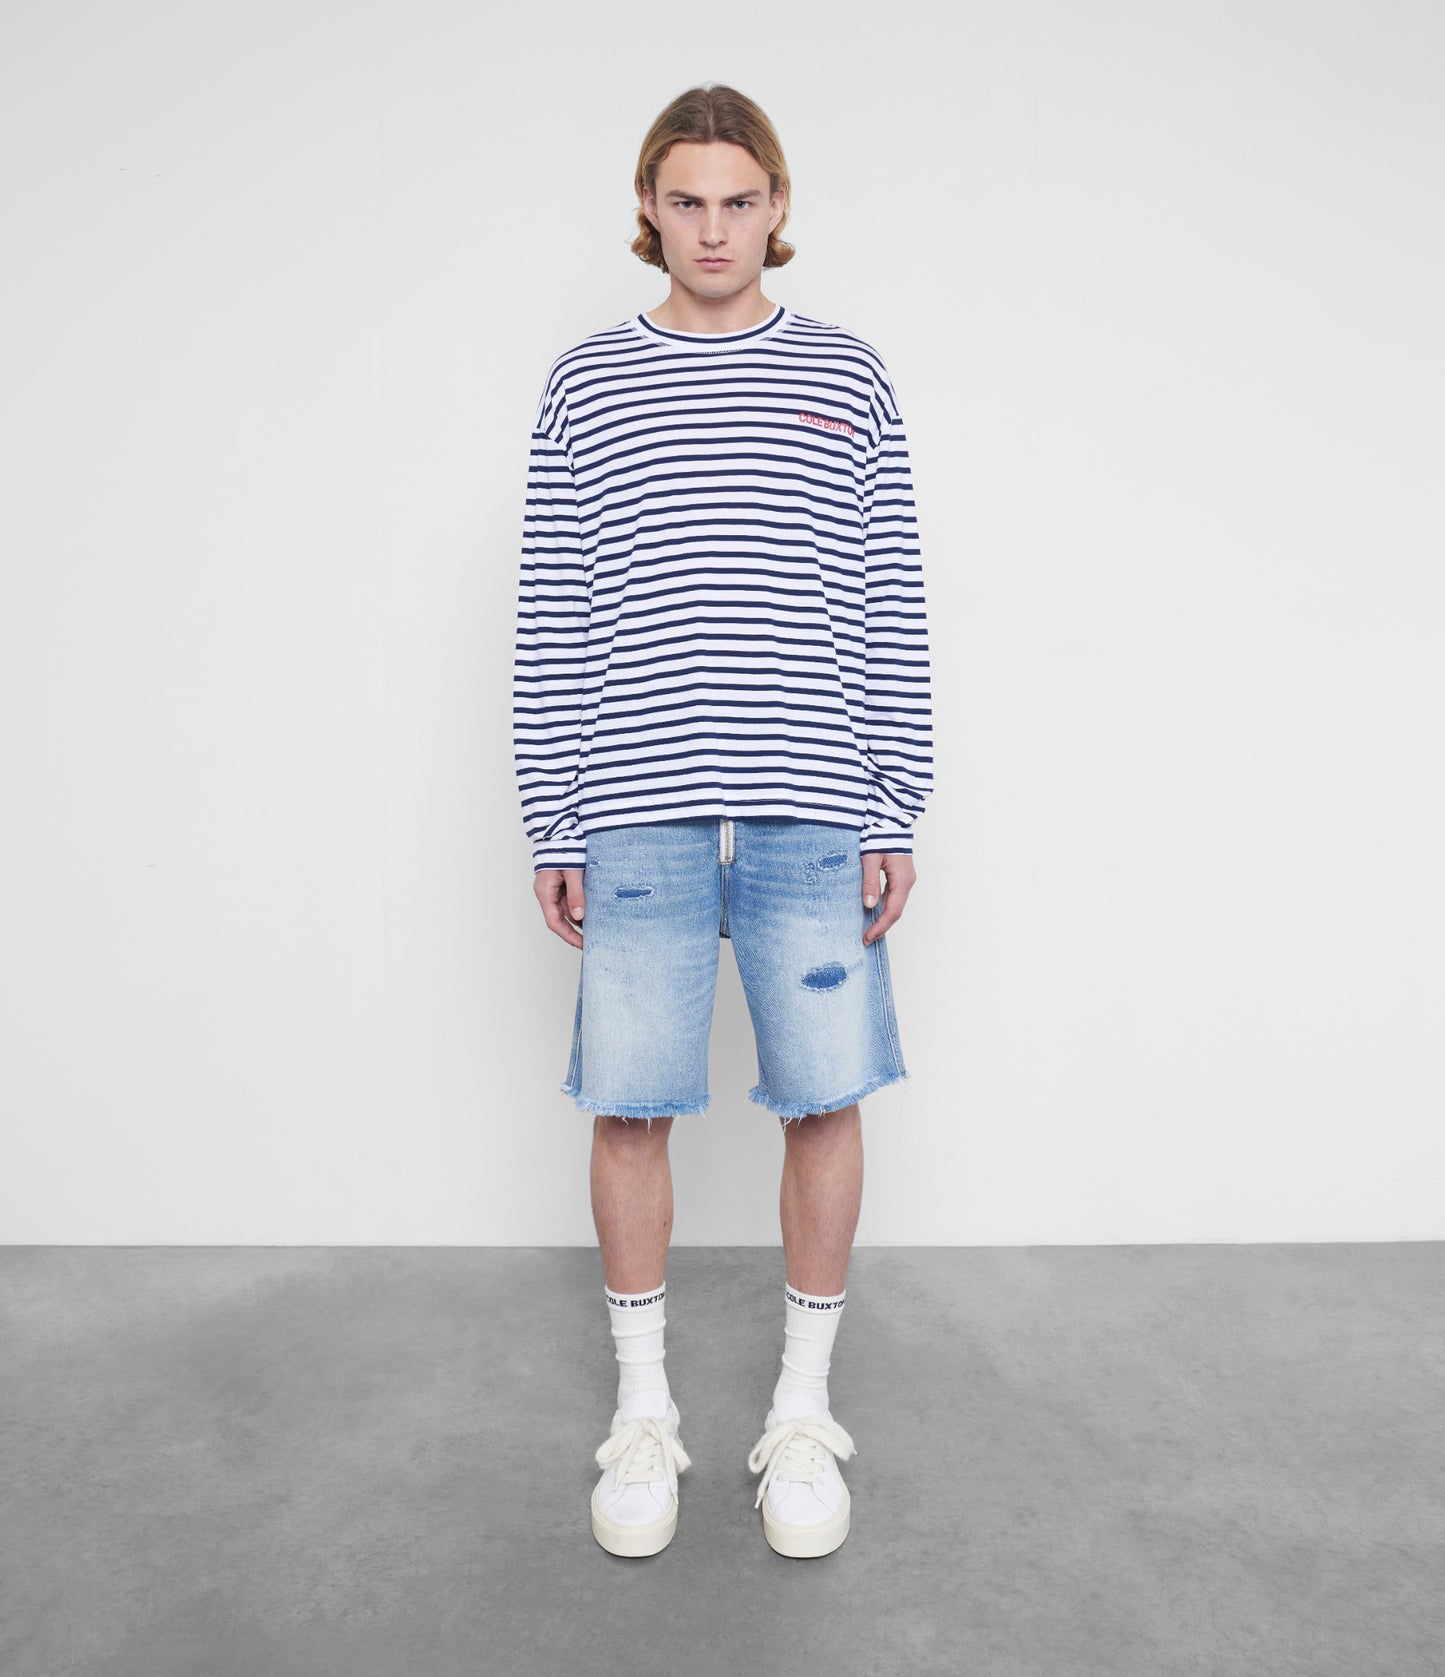 Cole Buxton | Sportswear Long Sleeved Striped T-Shirt | Mens | Cotton | Blue / White